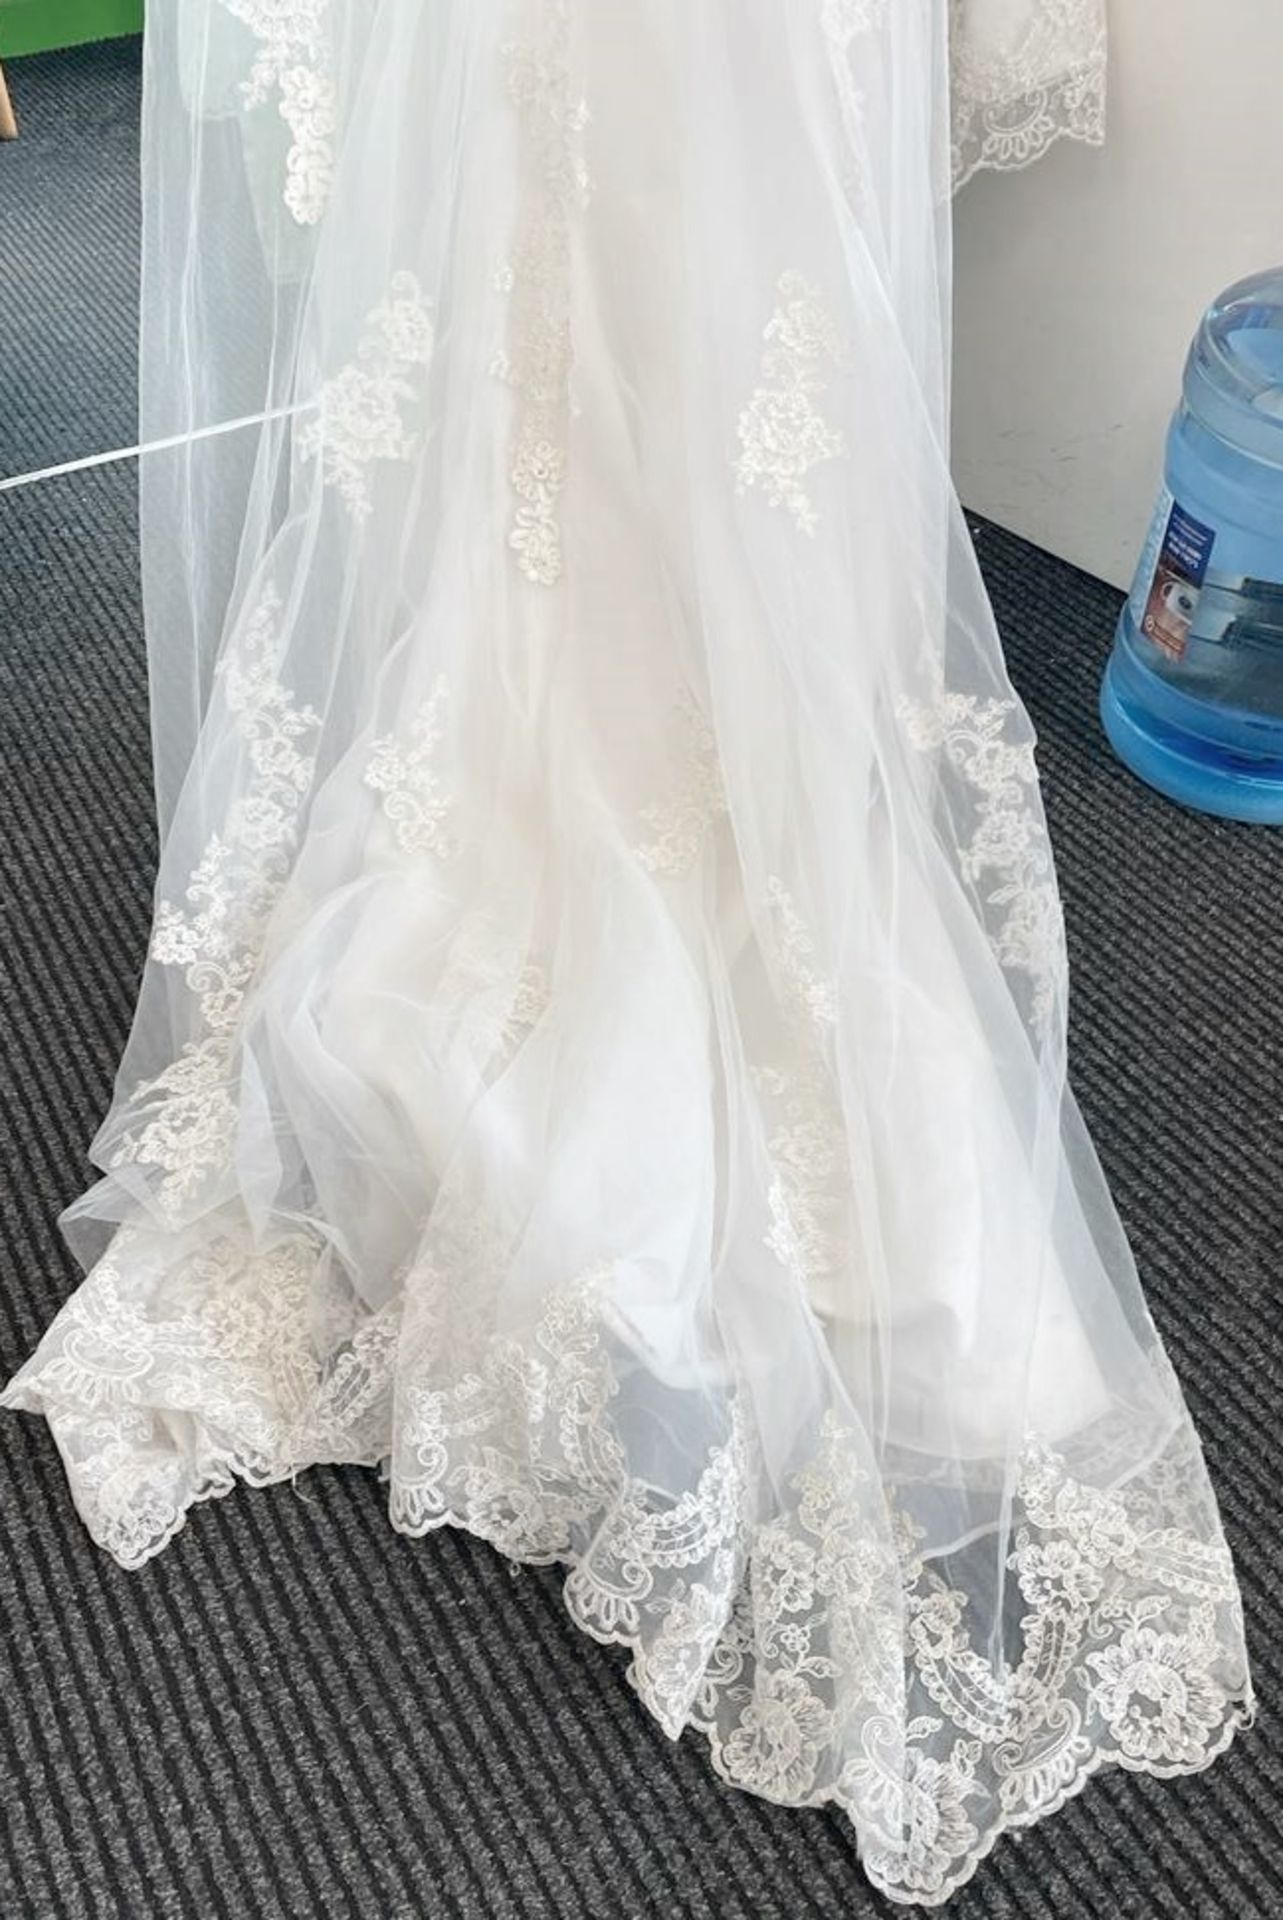 1 x ATELIER LYANNA Designer Wedding Dress Bridal Gown - Size: UK 12 - Original RRP £1,600 - Image 5 of 14